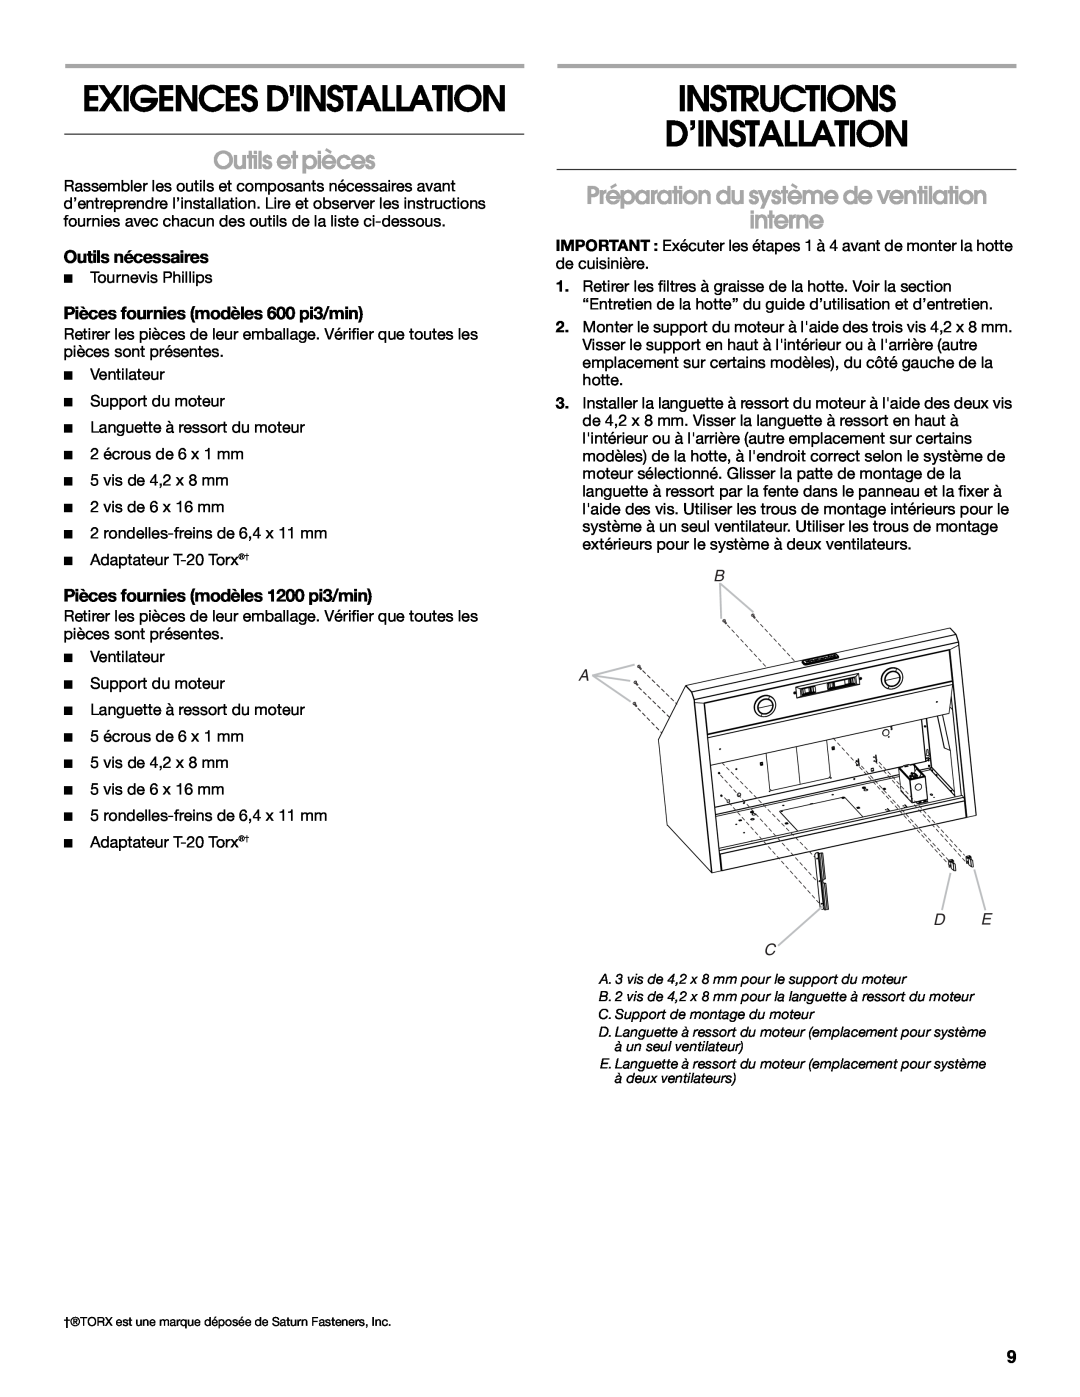 Whirlpool LI3ZJB / W10331012B Instructions D’Installation, Exigences Dinstallation, Outils et pièces, Outils nécessaires 